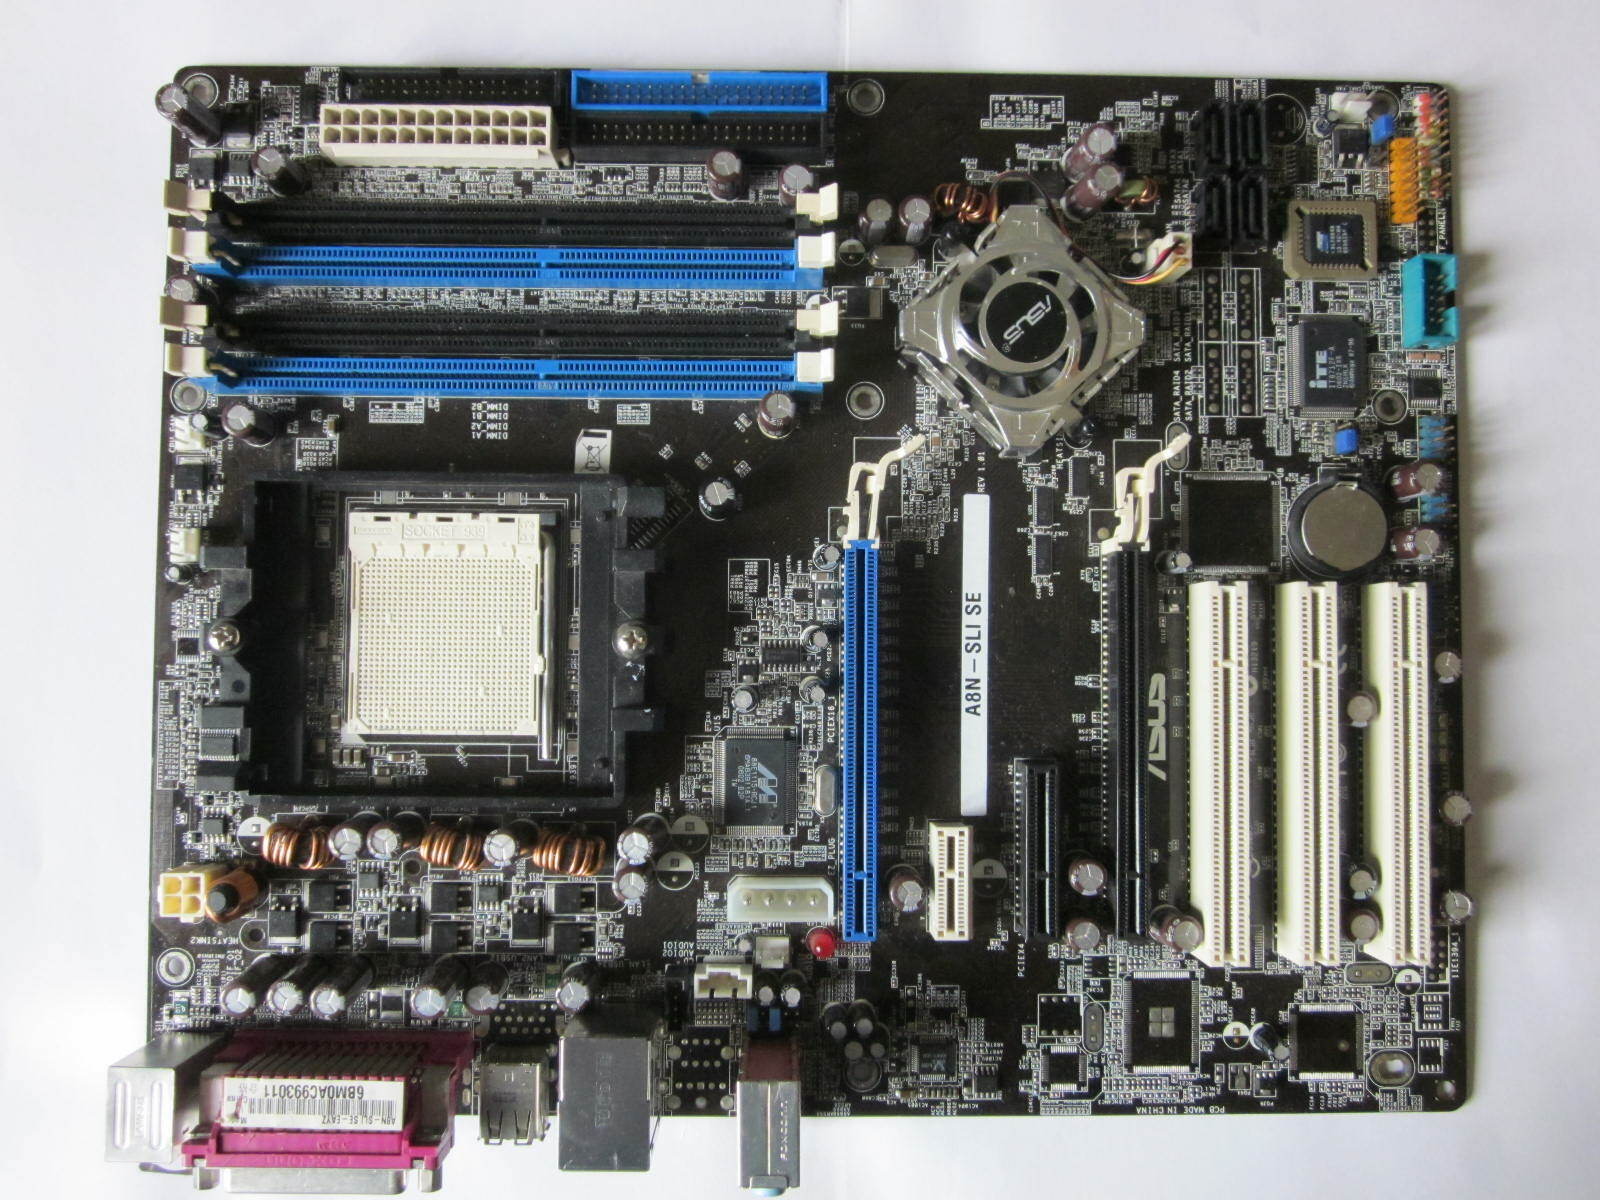 ASUS+A8N-SLI+Deluxe%2C+Socket+939%2C+AMD+Motherboard for sale ...